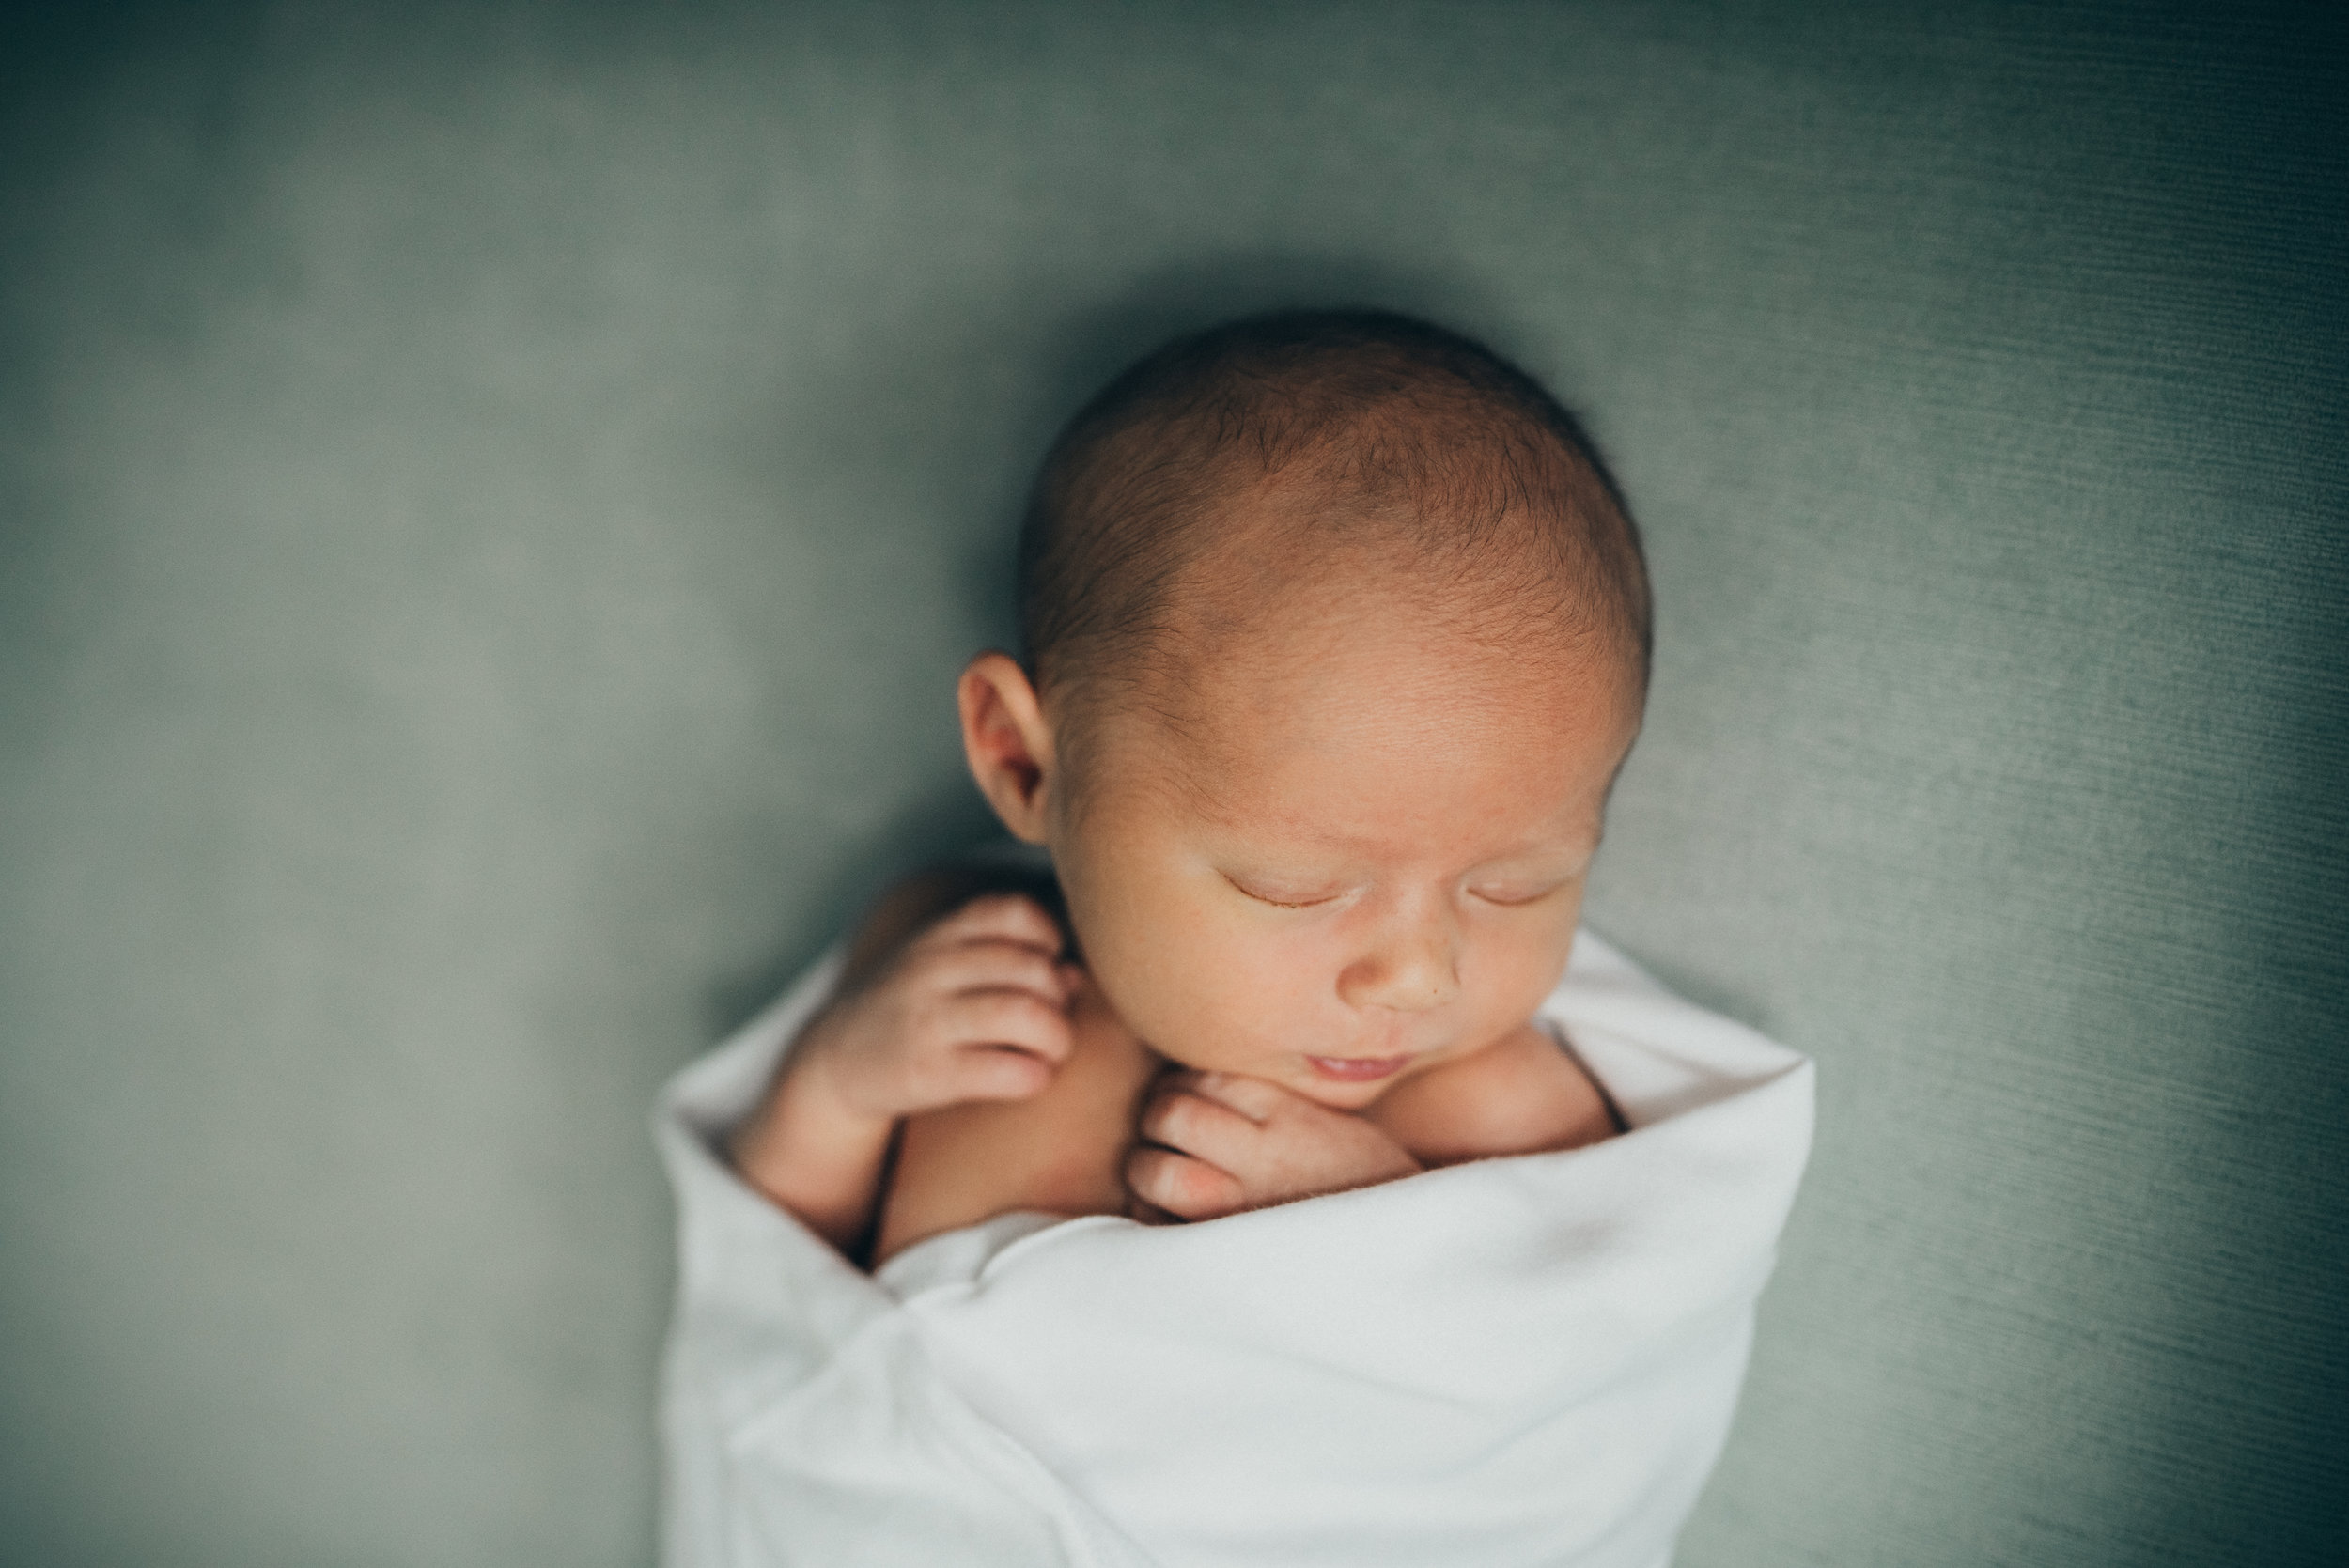 Natural-light-newborn-portrait-baby-boy1.jpg